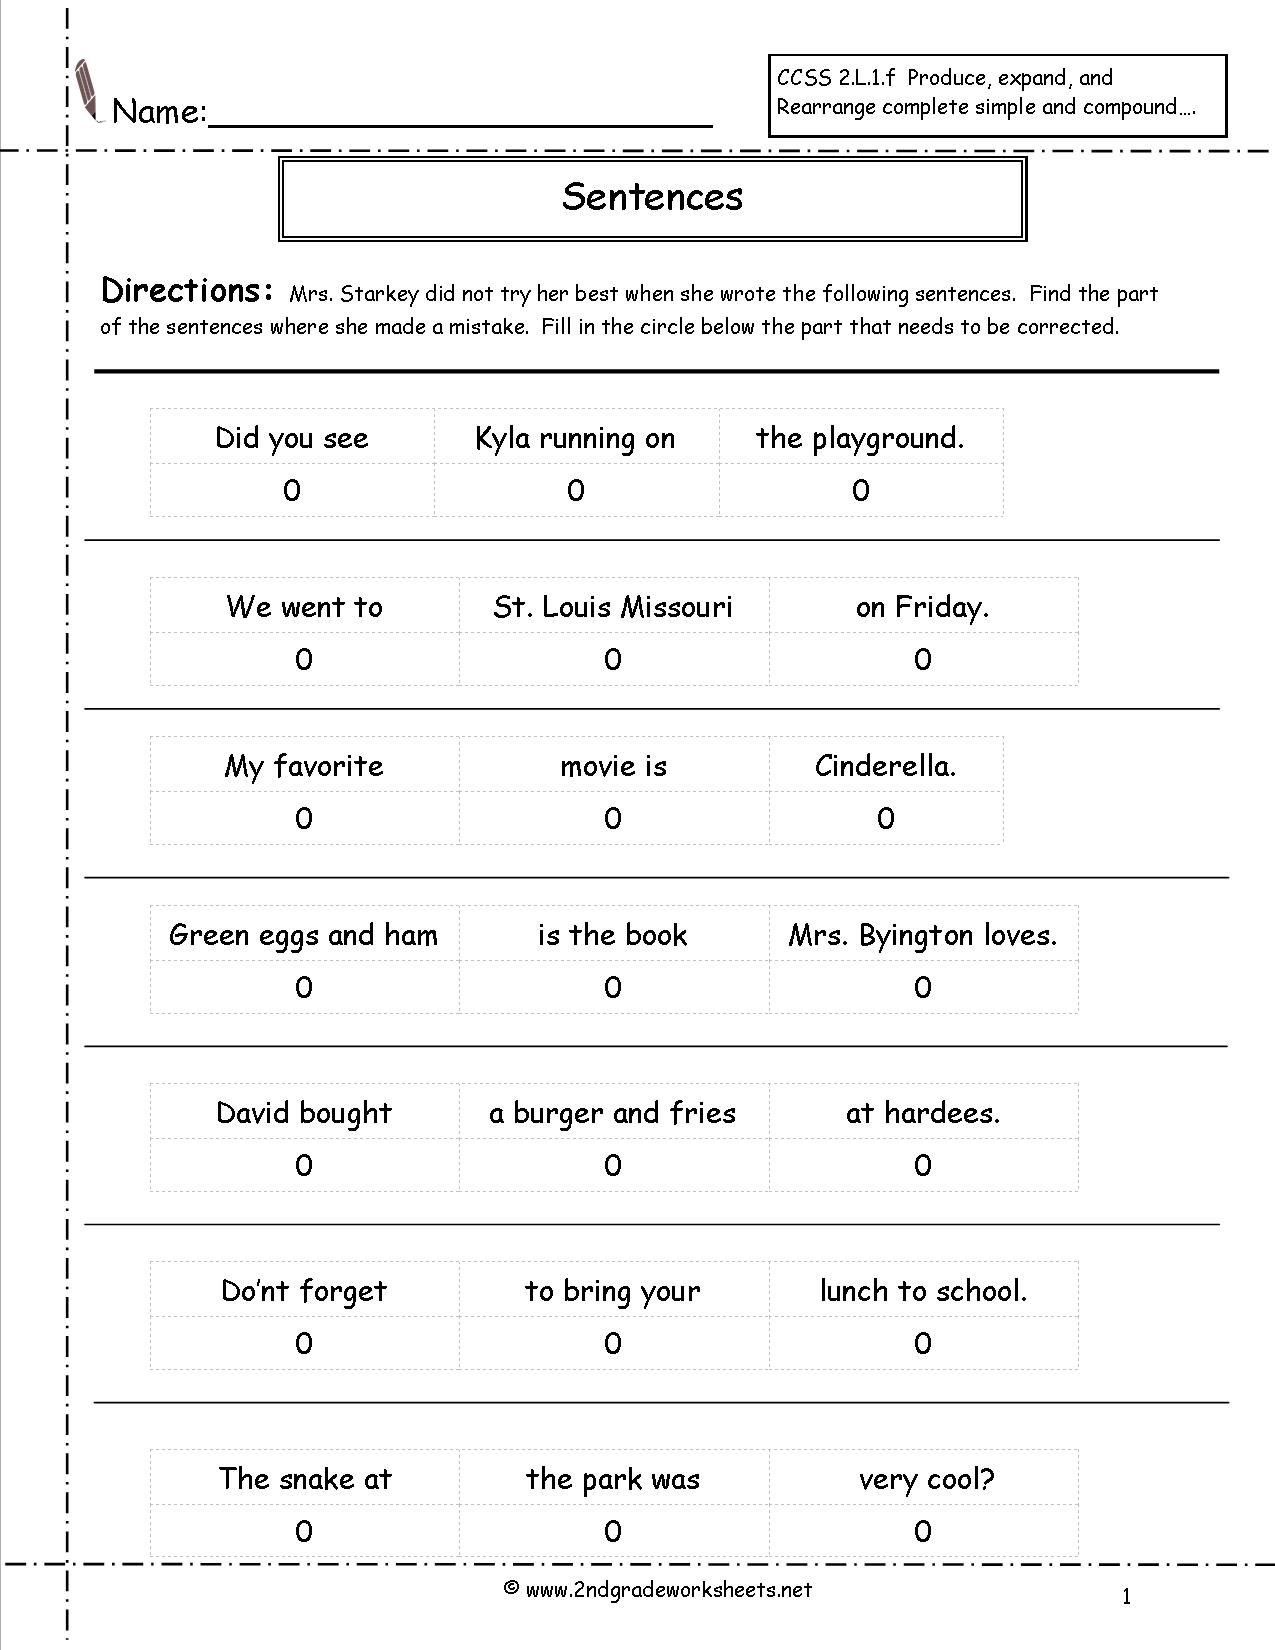 Correct Sentences Worksheet